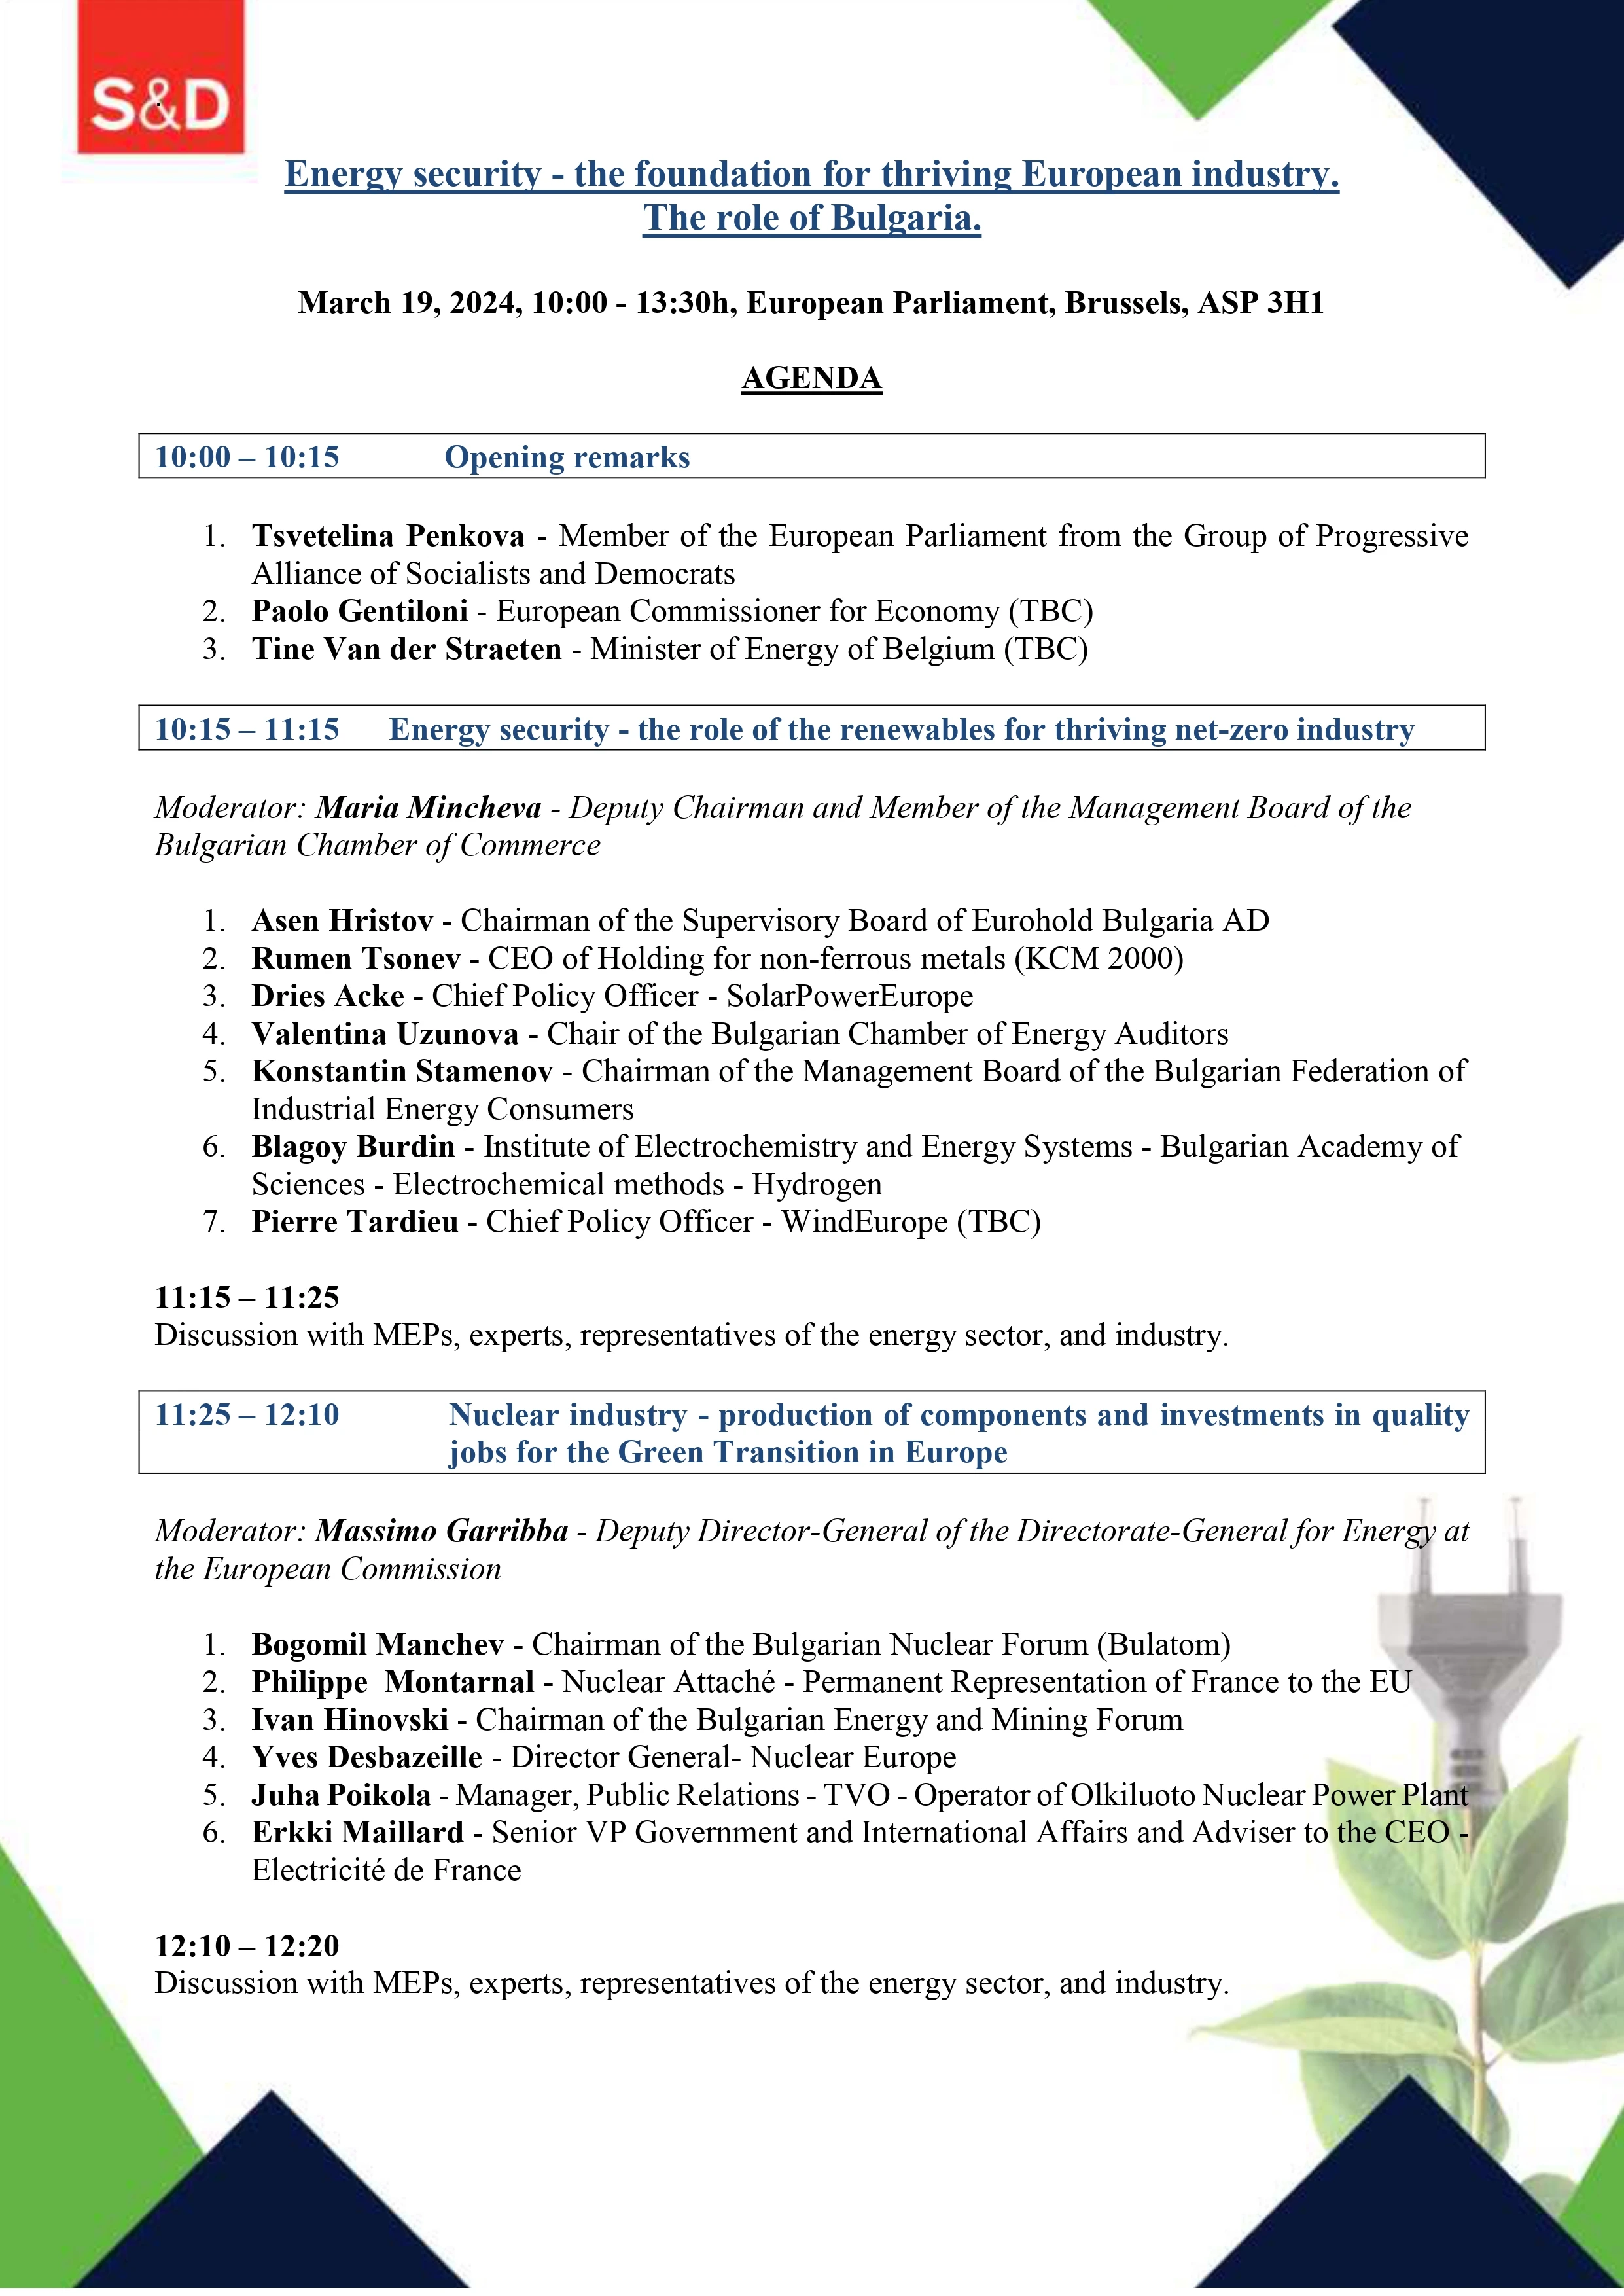 2004-tsvetelina-penkova-energy-industry-conference---agenda-19032024page-0001-17109669054365.jpg